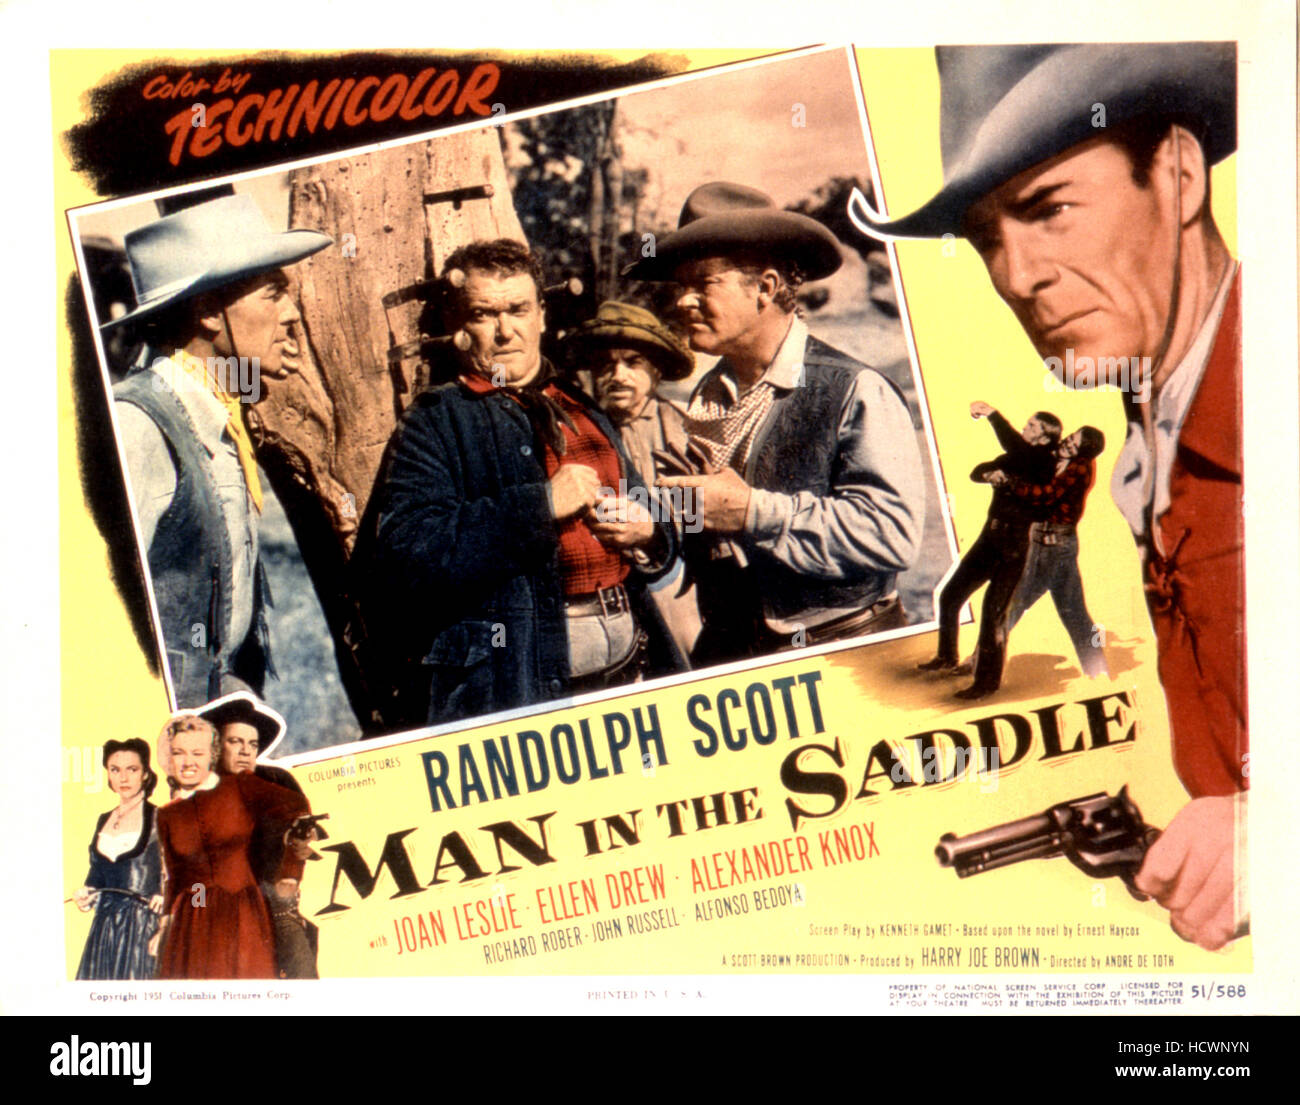 MAN IN THE SADDLE, Randolph Scott, Frank Sully, Alfonso Bedoya, Guinn 'Big  Boy' Williams, lobby card, poster art, 1951 Stock Photo - Alamy